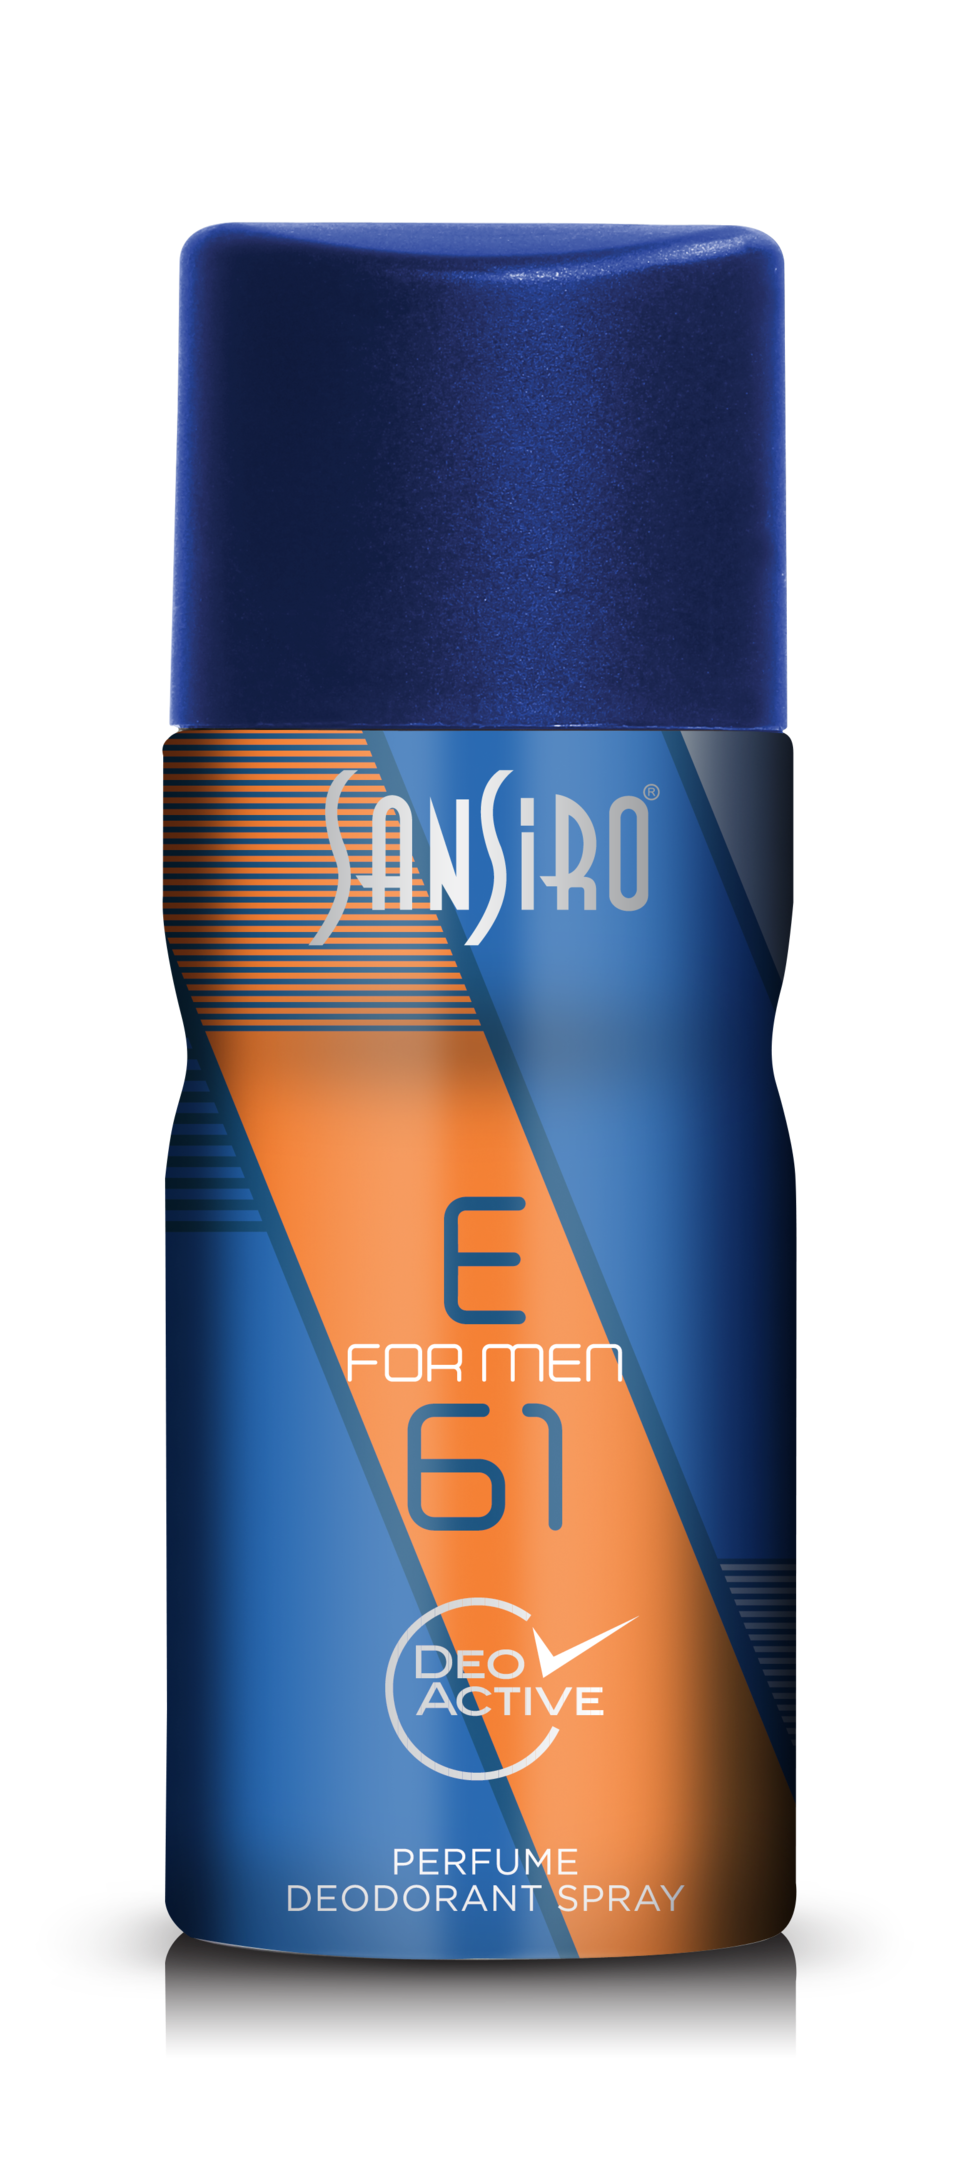 Sansiro Perfume - Deo For Men - Deodorant E61